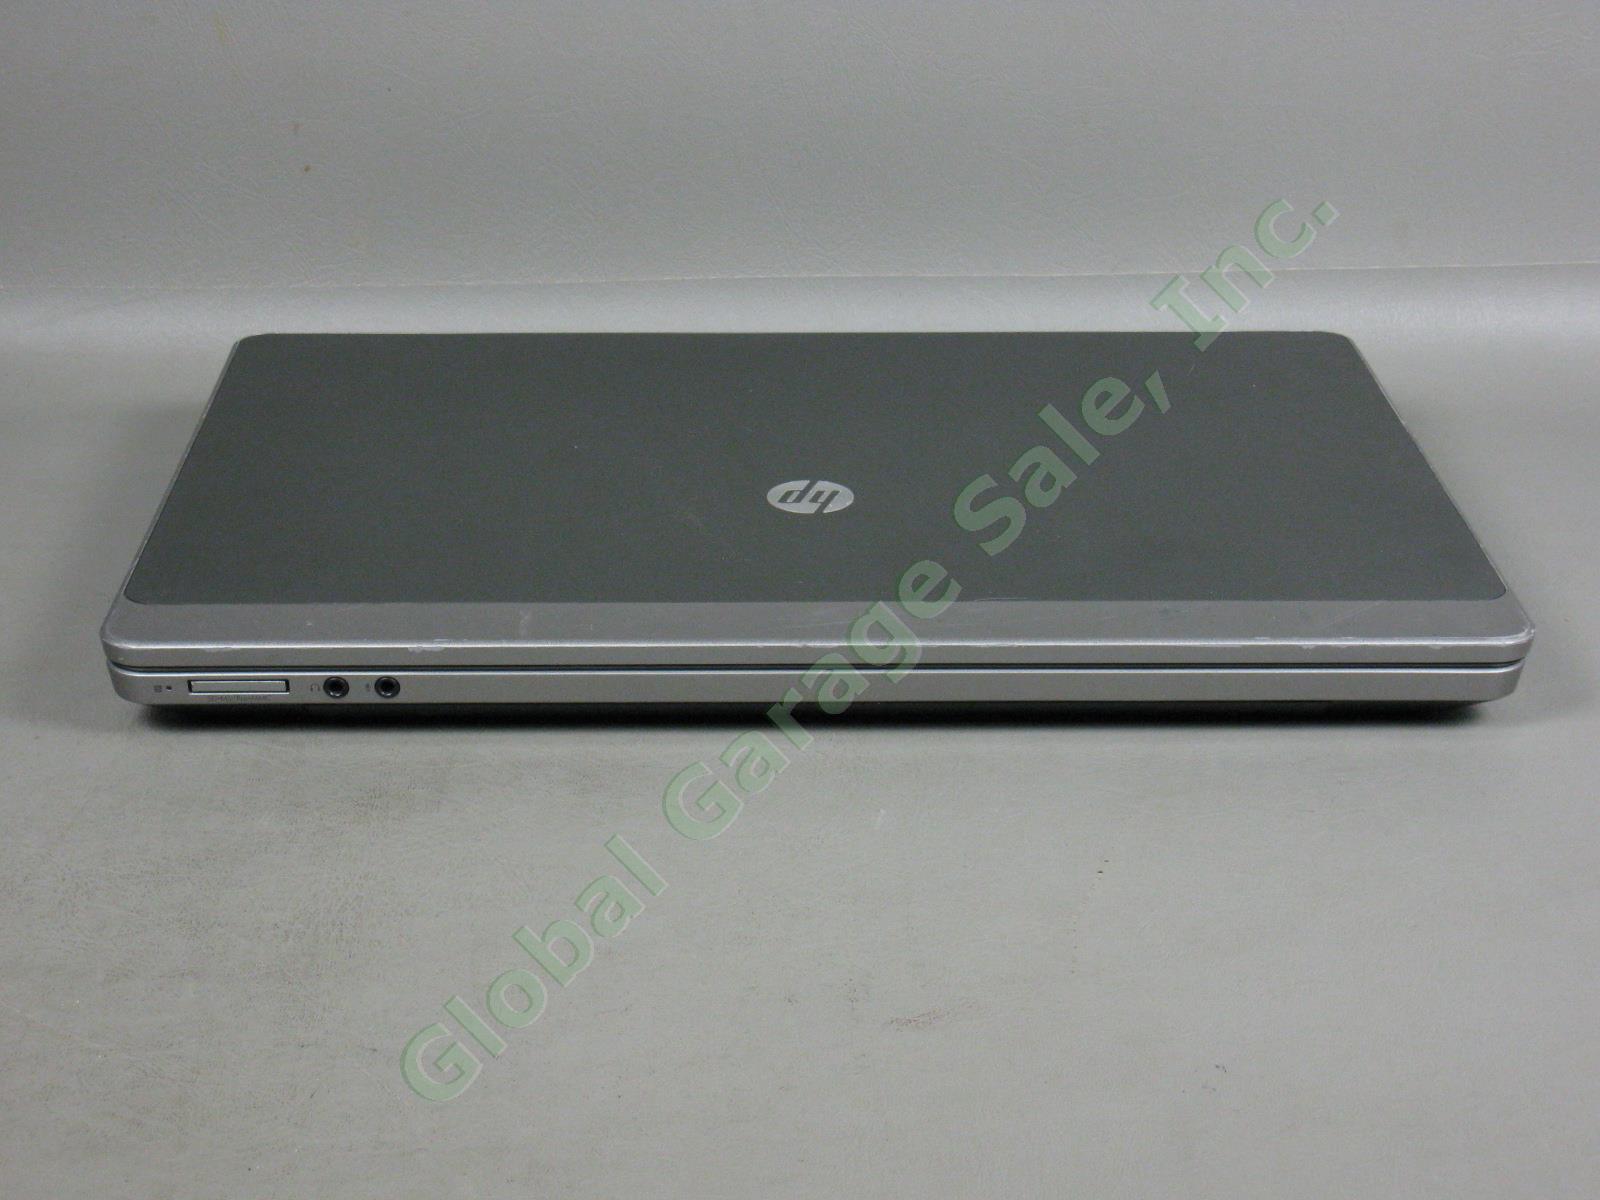 HP 4530s ProBook 15.6" Laptop Intel i3 2.30GHz 2GB 500GB Windows 7 Professional 6